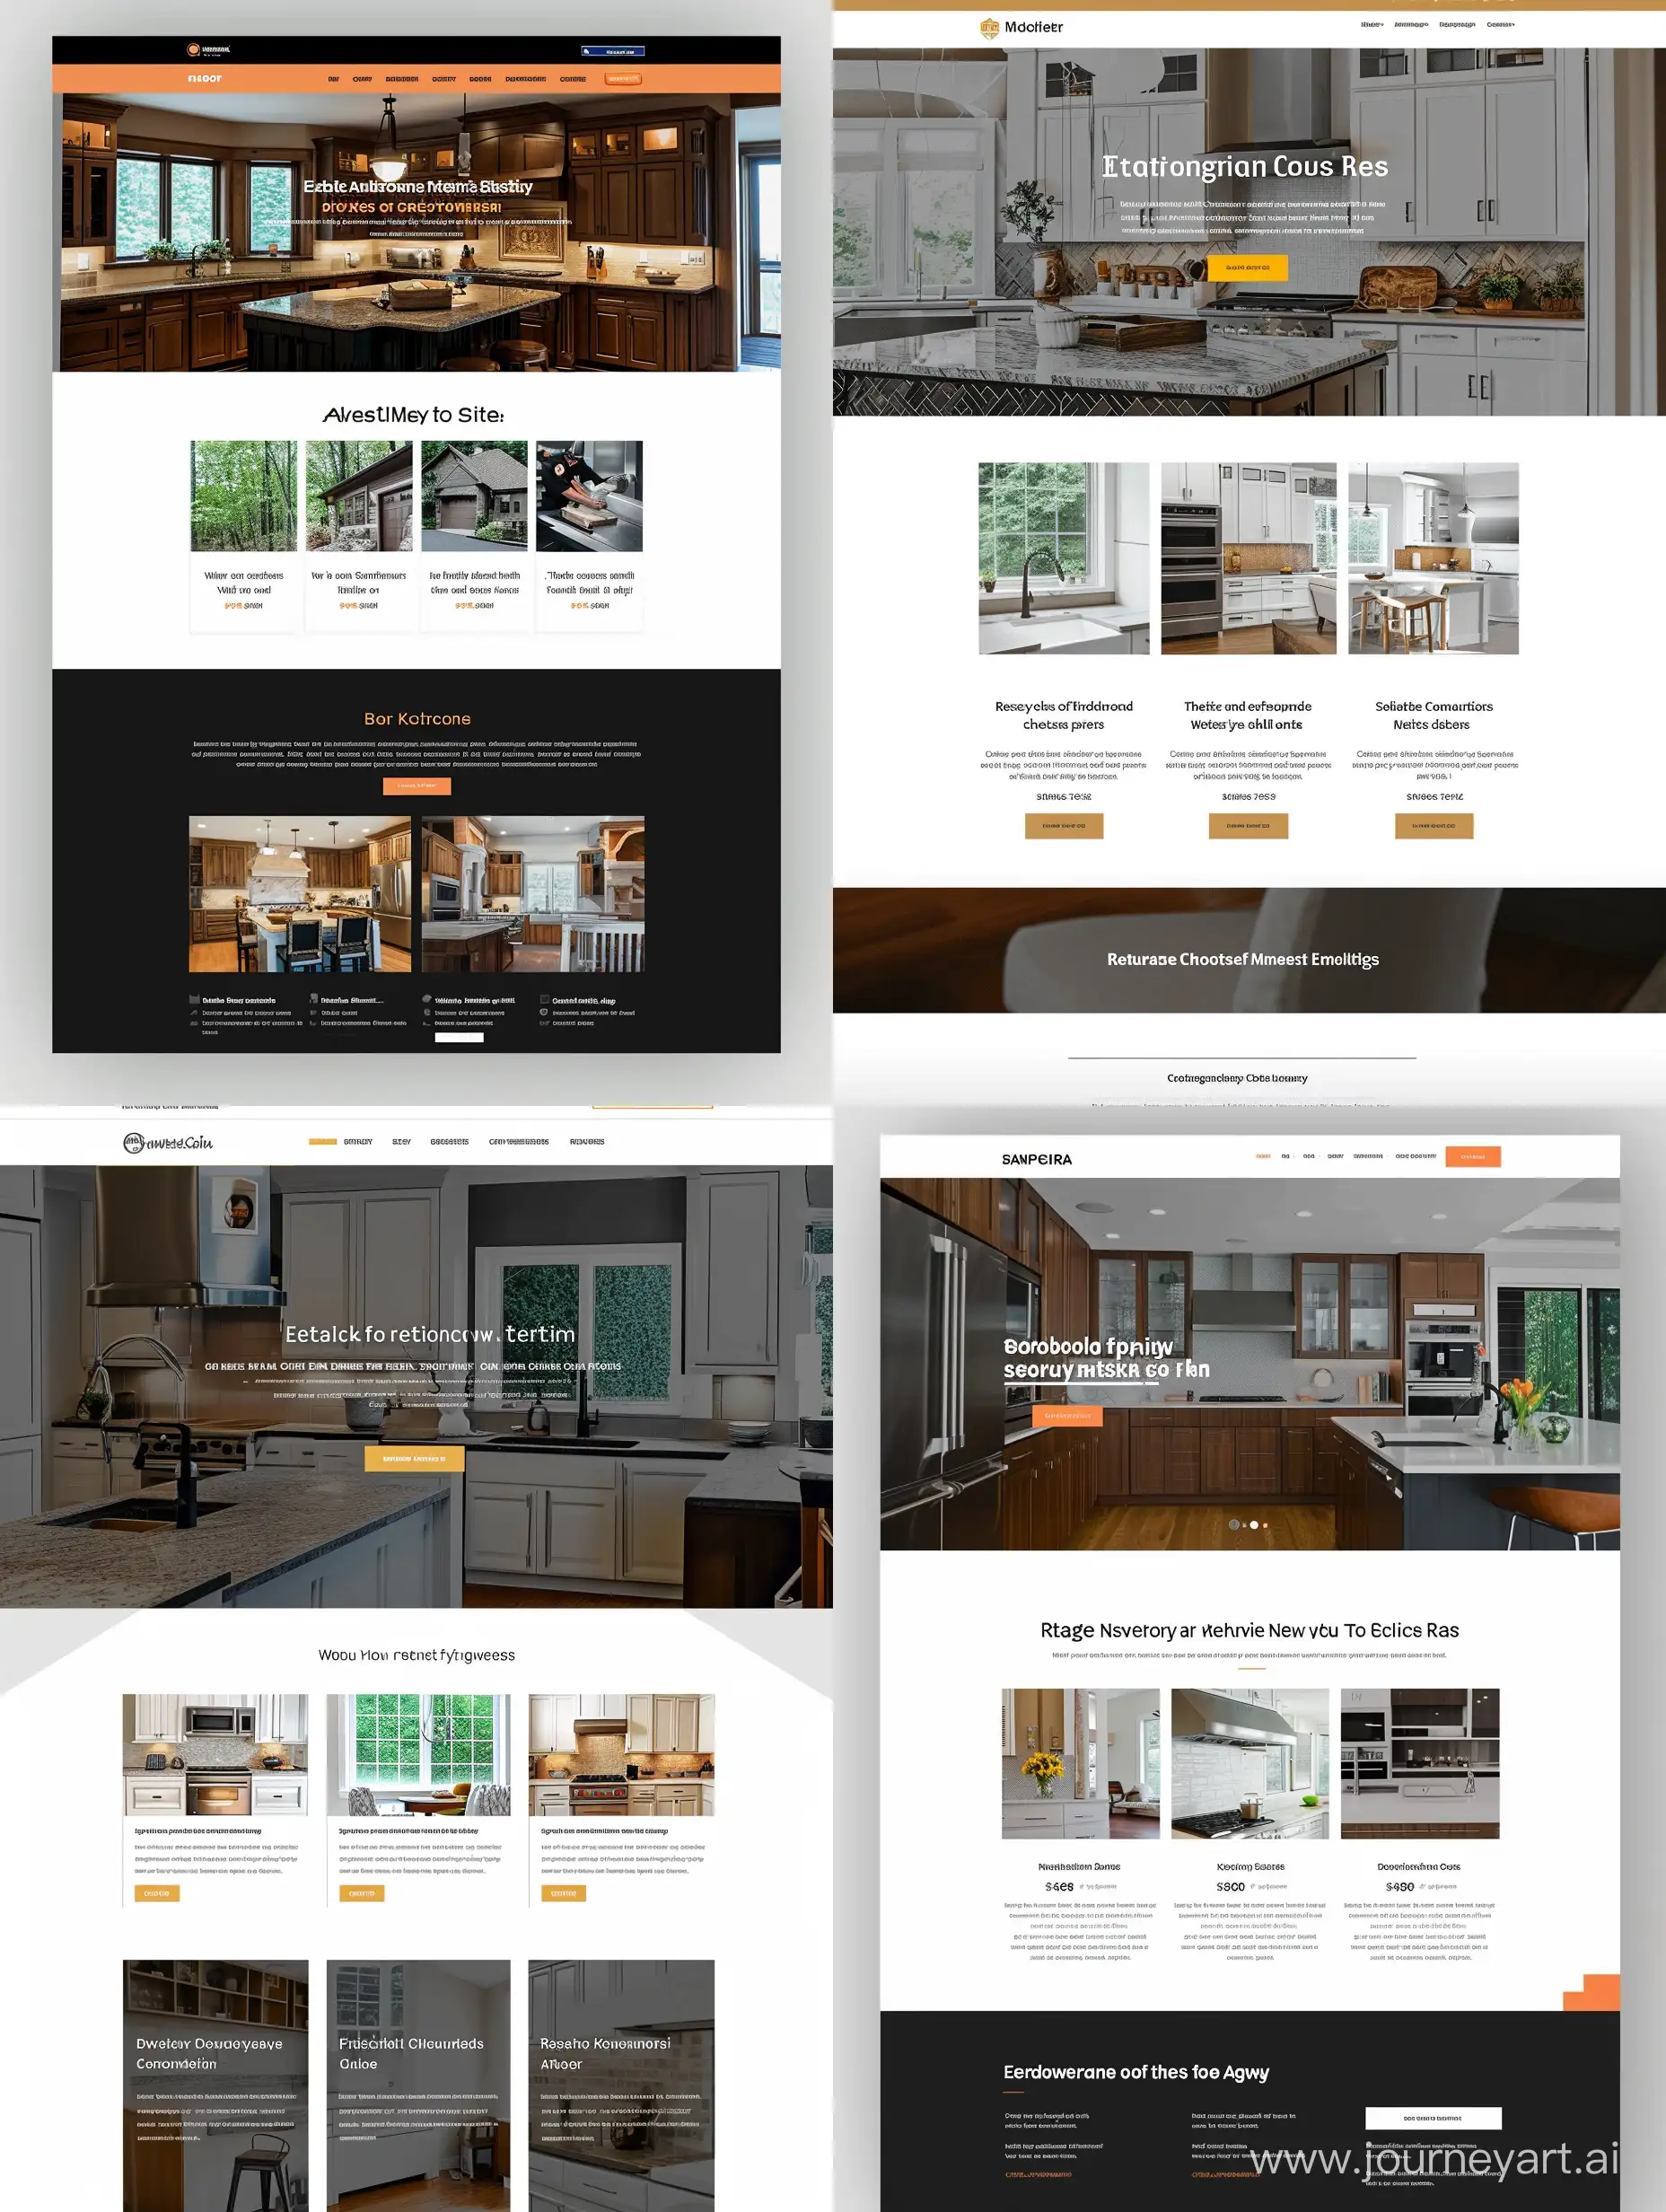 Modern-Refacing-and-Remodel-Contractor-Website-Design